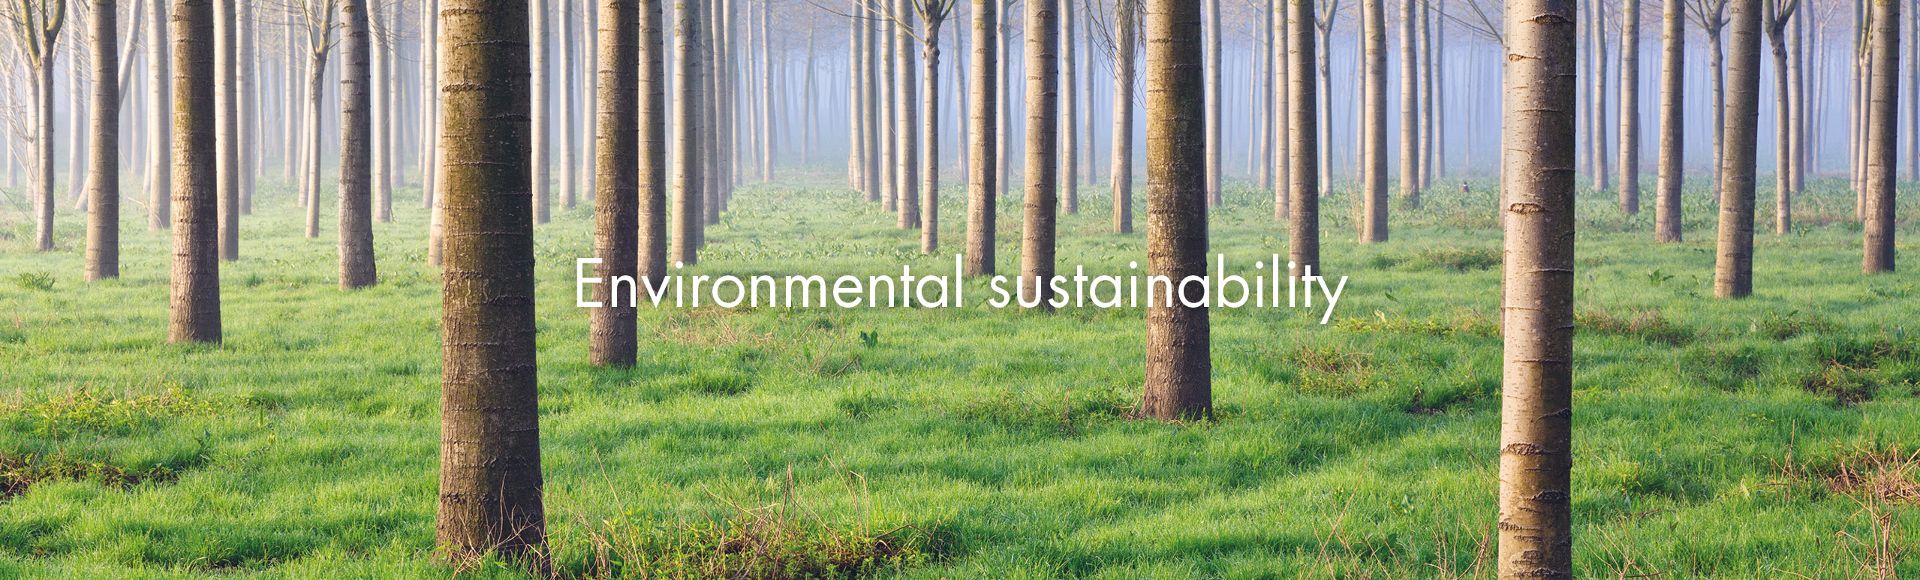 Environmental sustainability - Smeg